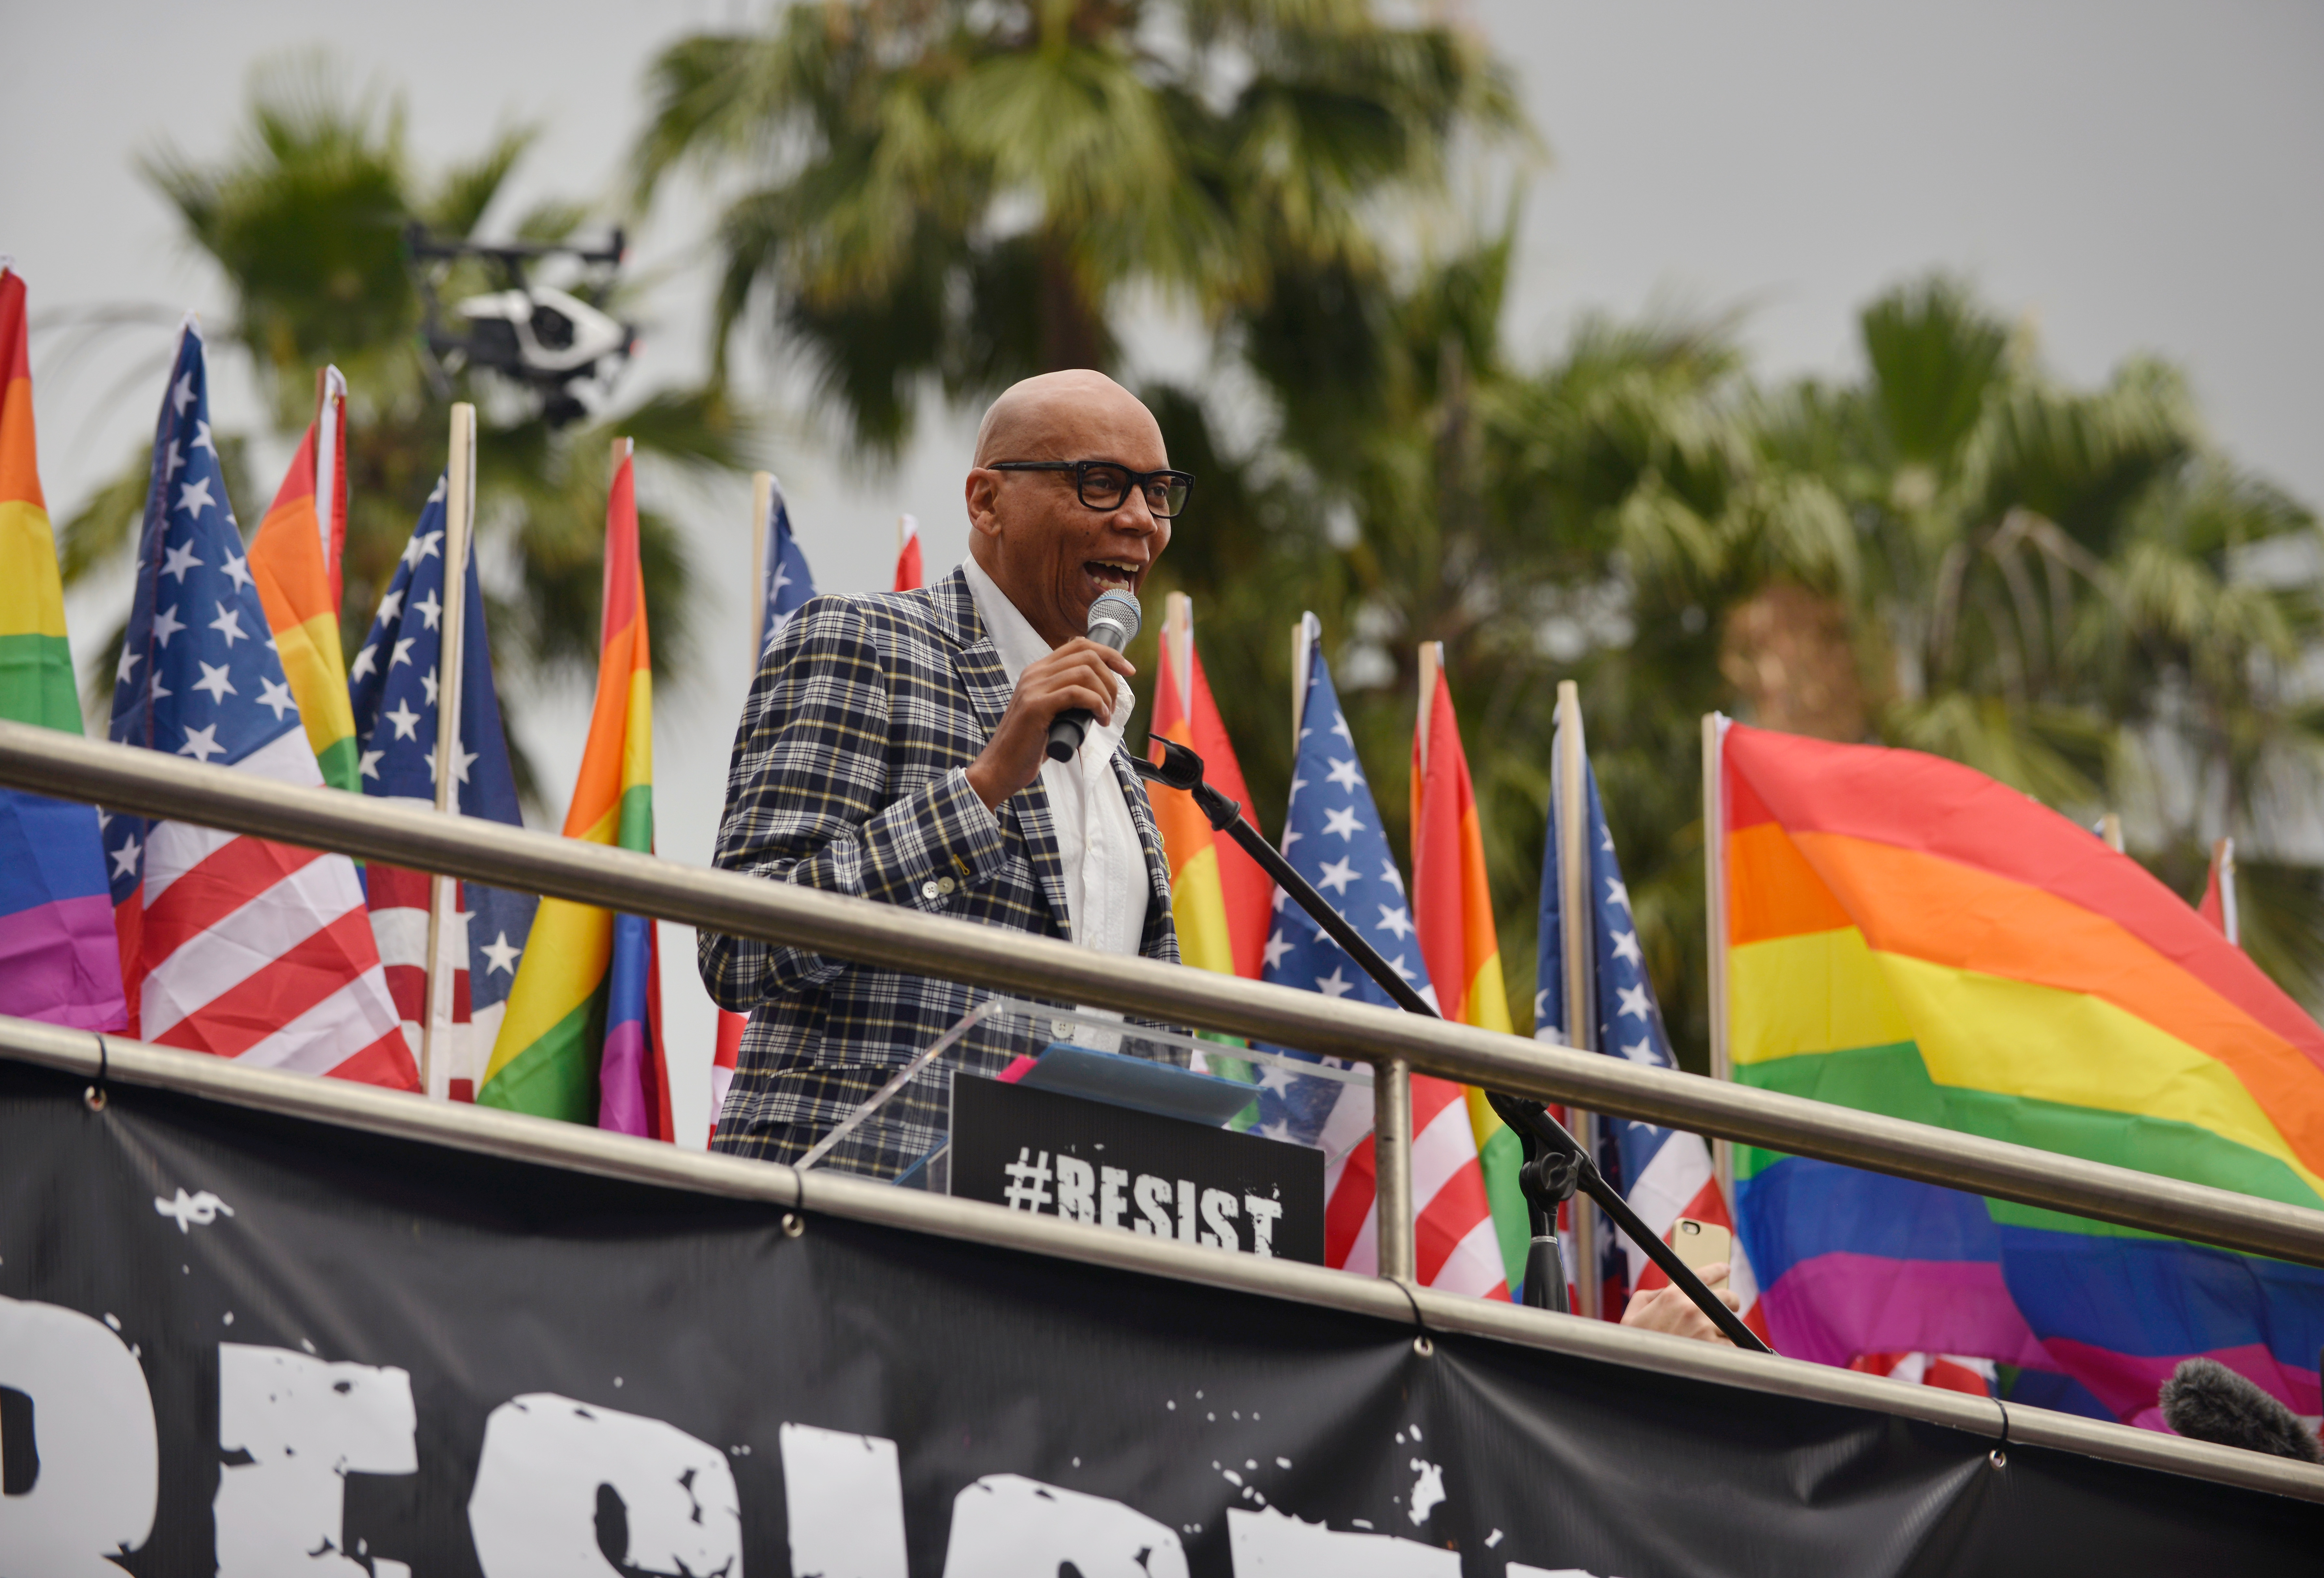 WEST HOLLYWOOD, CA - JUNE 11: RuPaul speaks at the LA Pride ResistMarch on June 11, 2017 in West Hollywood, California. (Photo by Chelsea Guglielmino/Getty Images)